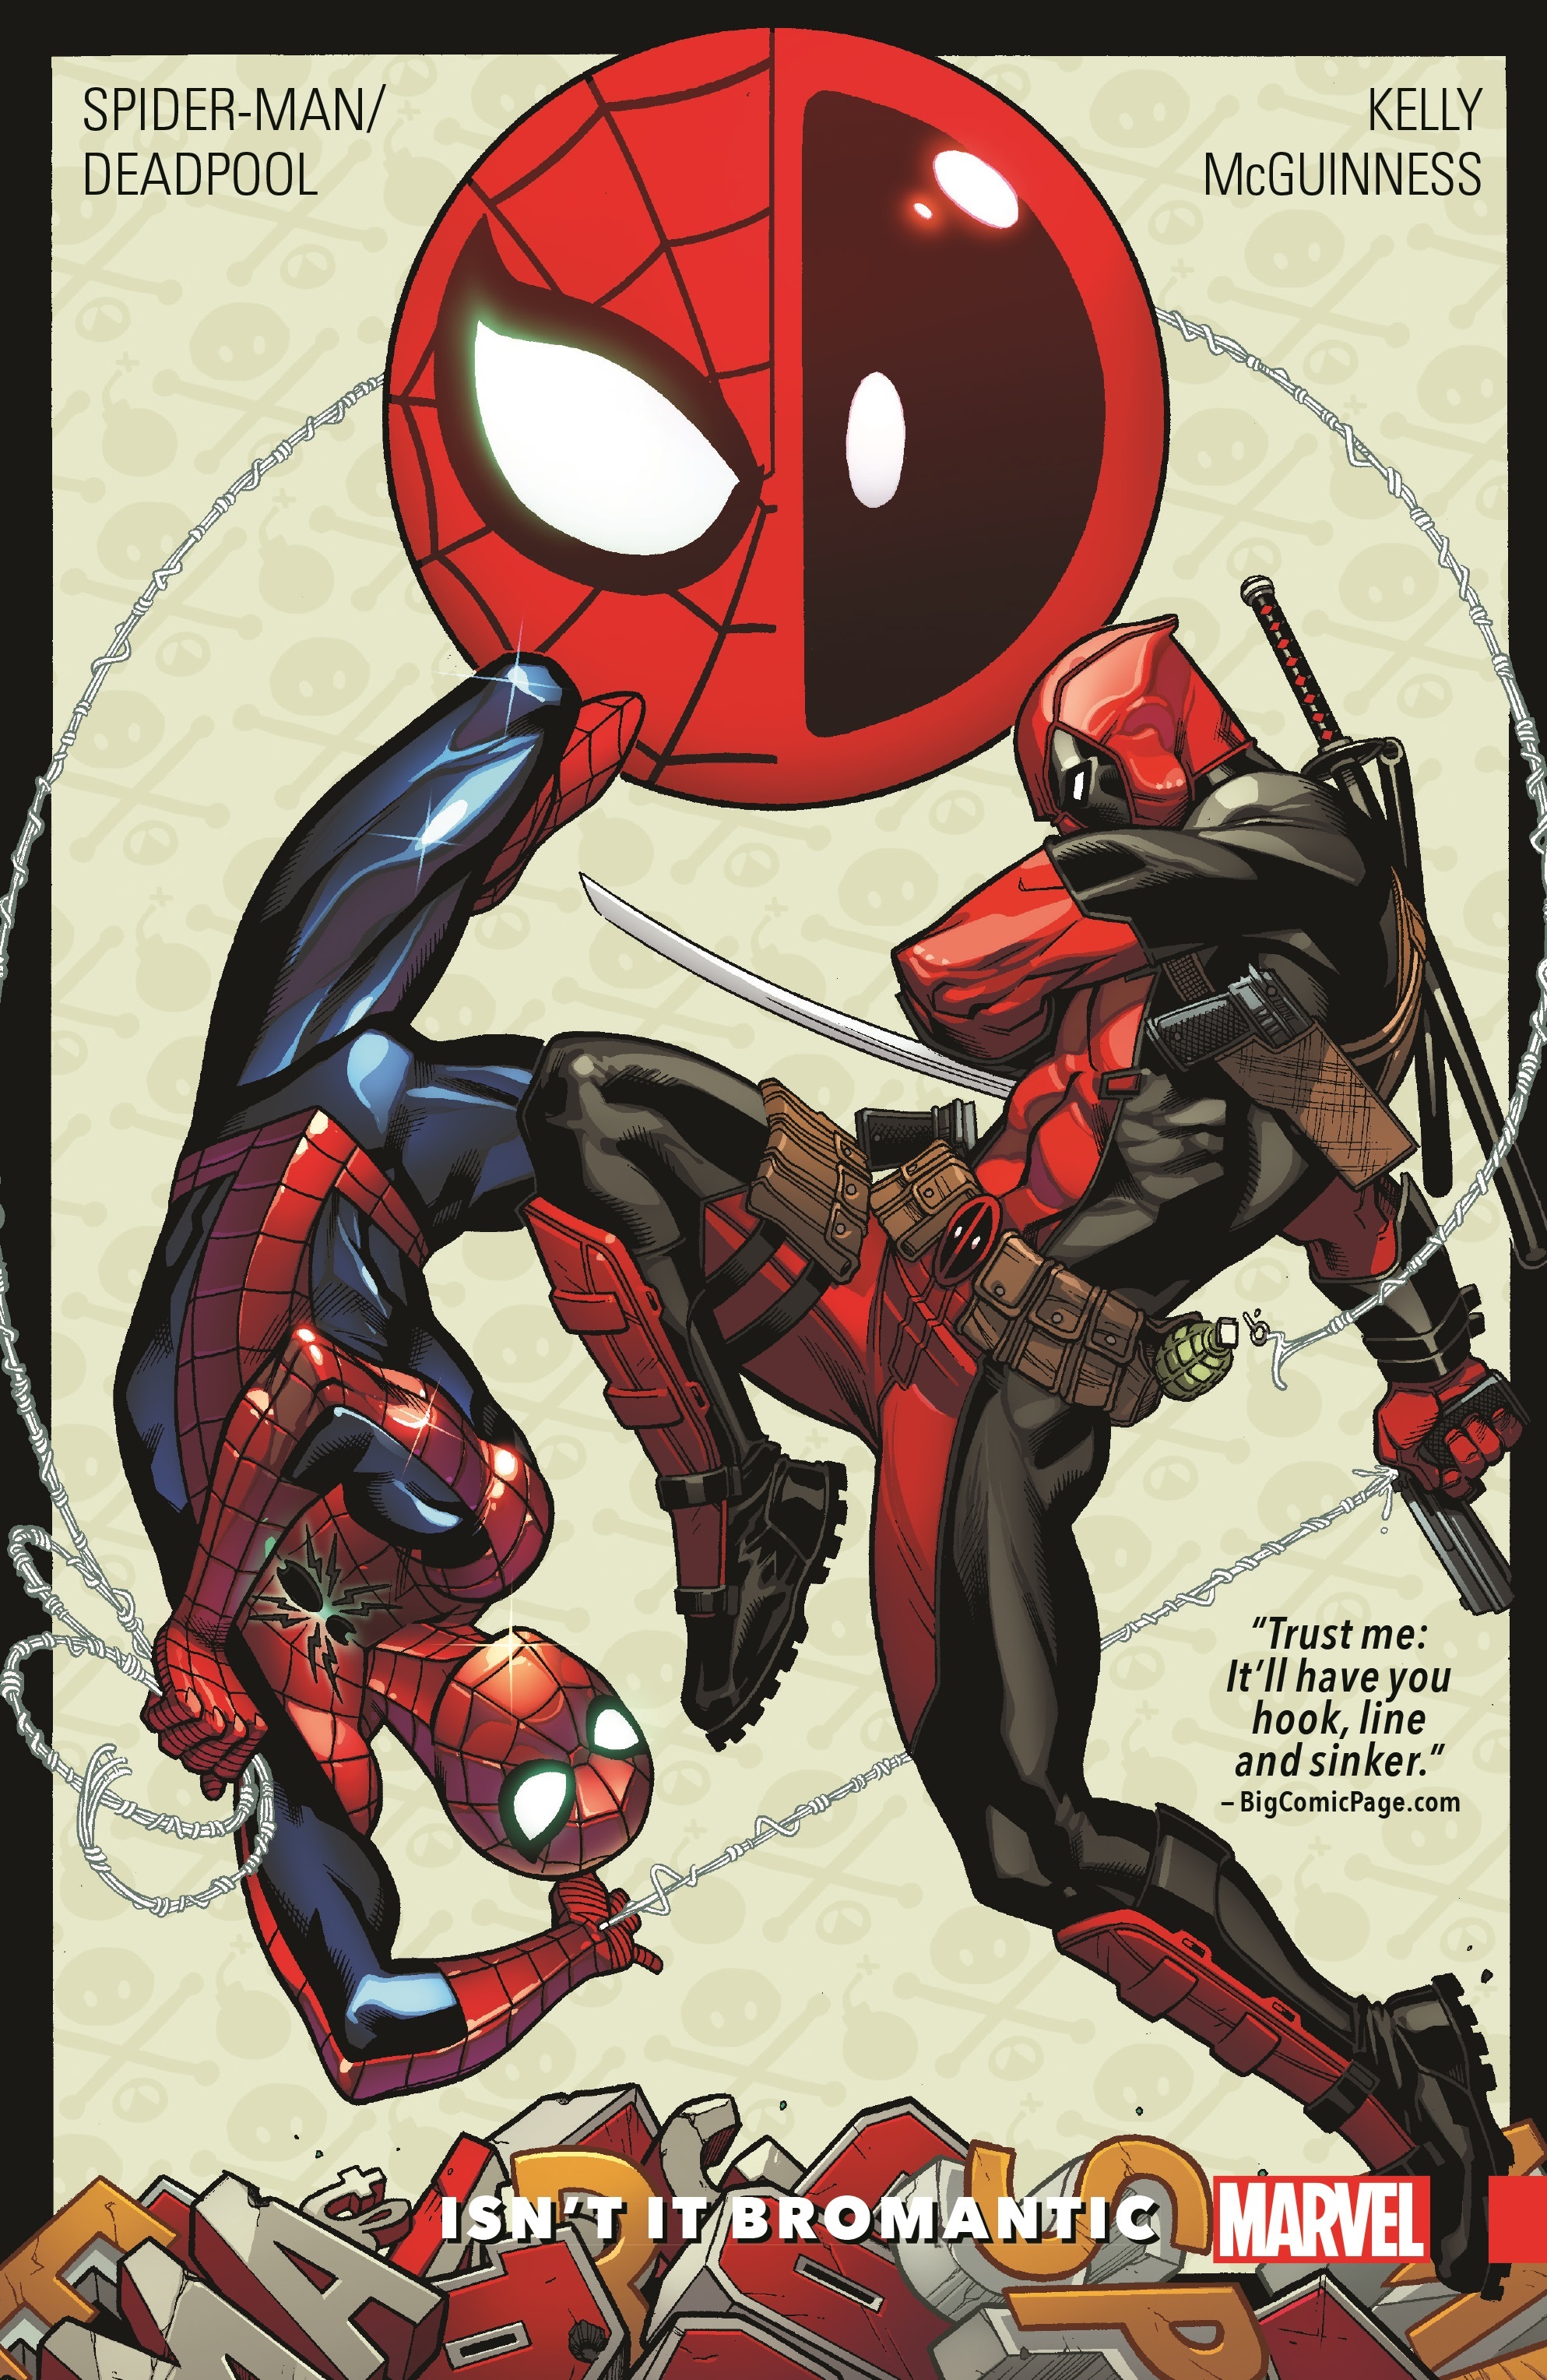 Spider-Man/Deadpool Vol. 1: Isn't It Bromantic (Trade Paperback)